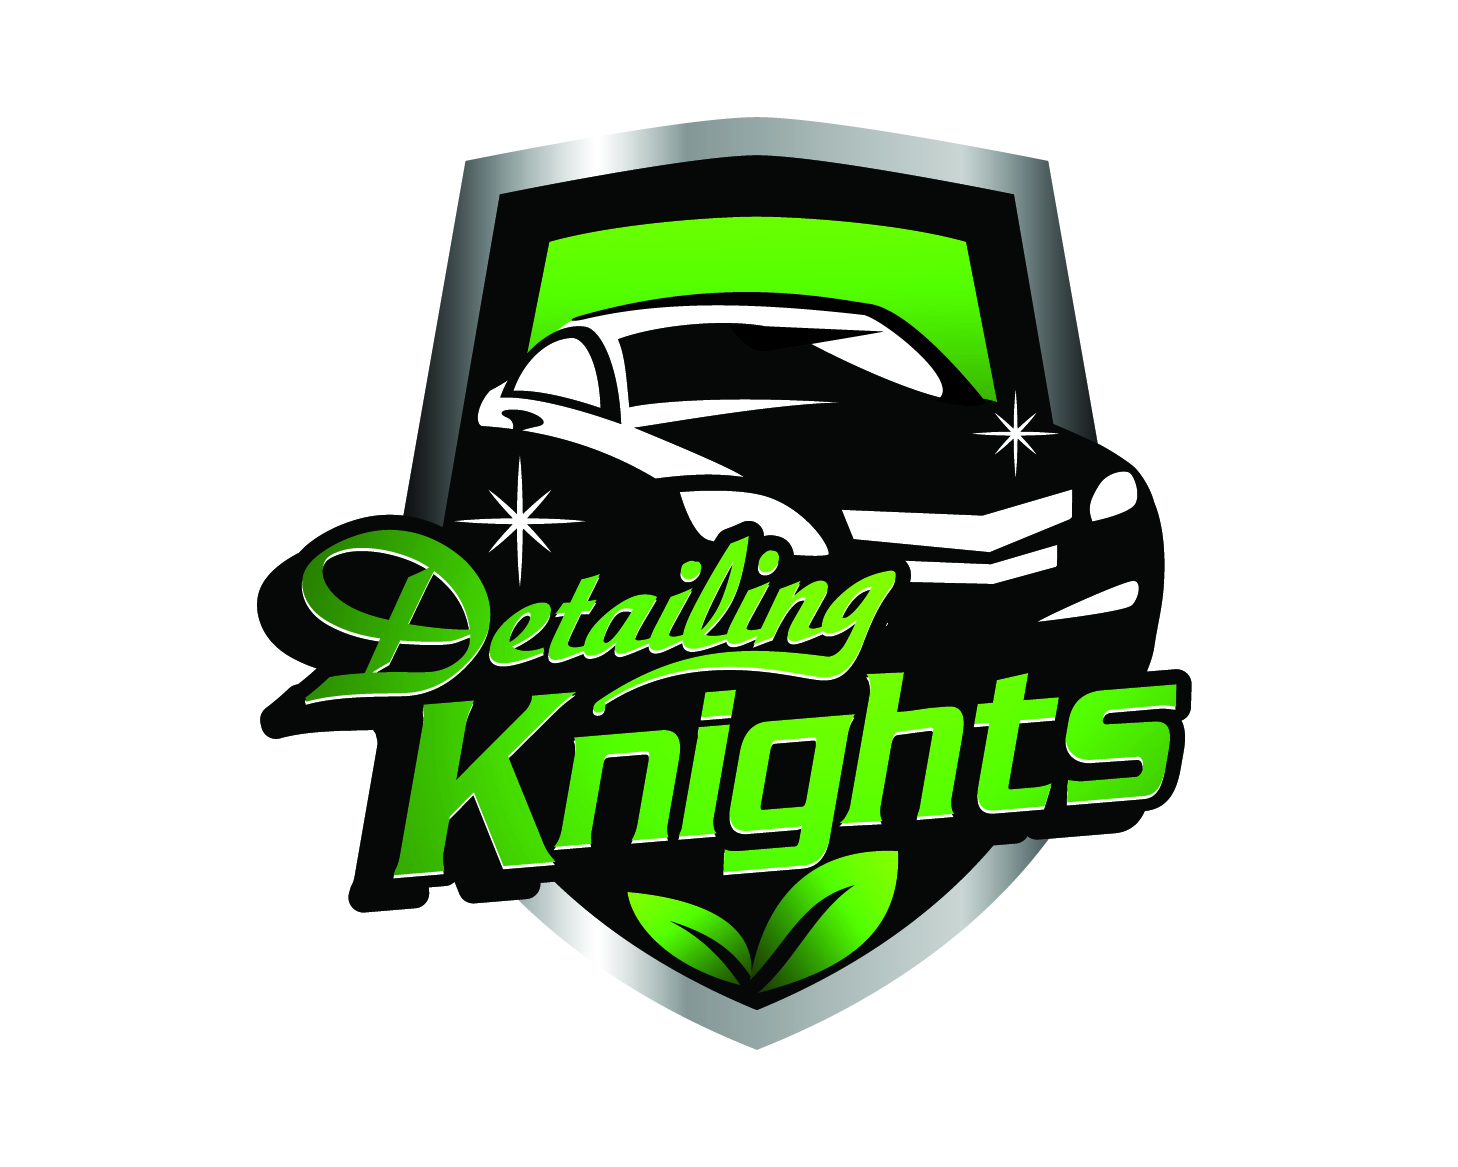   detailing_knights_final_logo.jpg